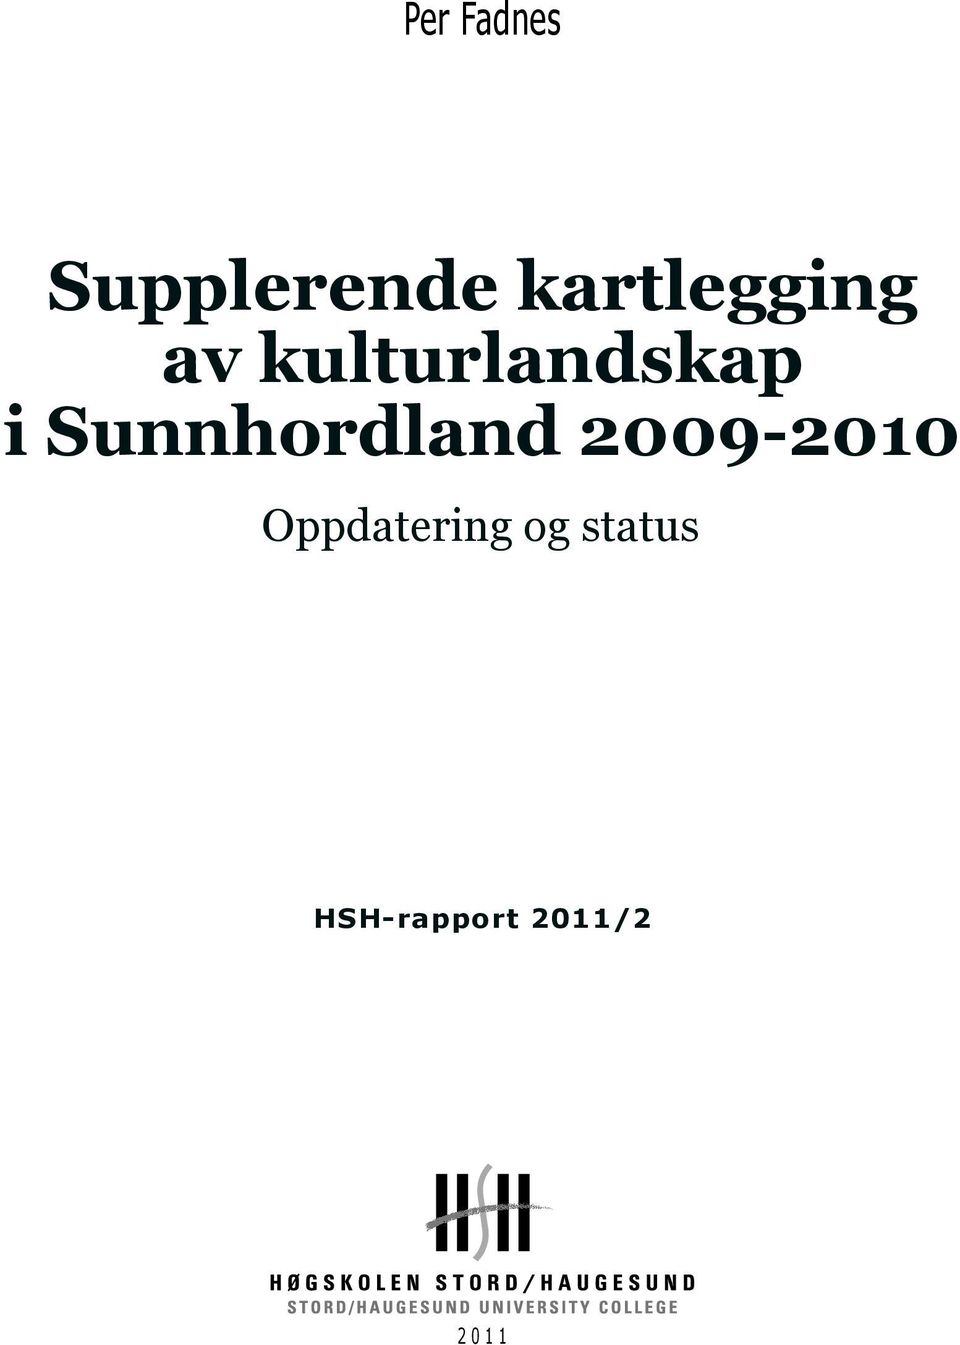 Sunnhordland 2009-2010